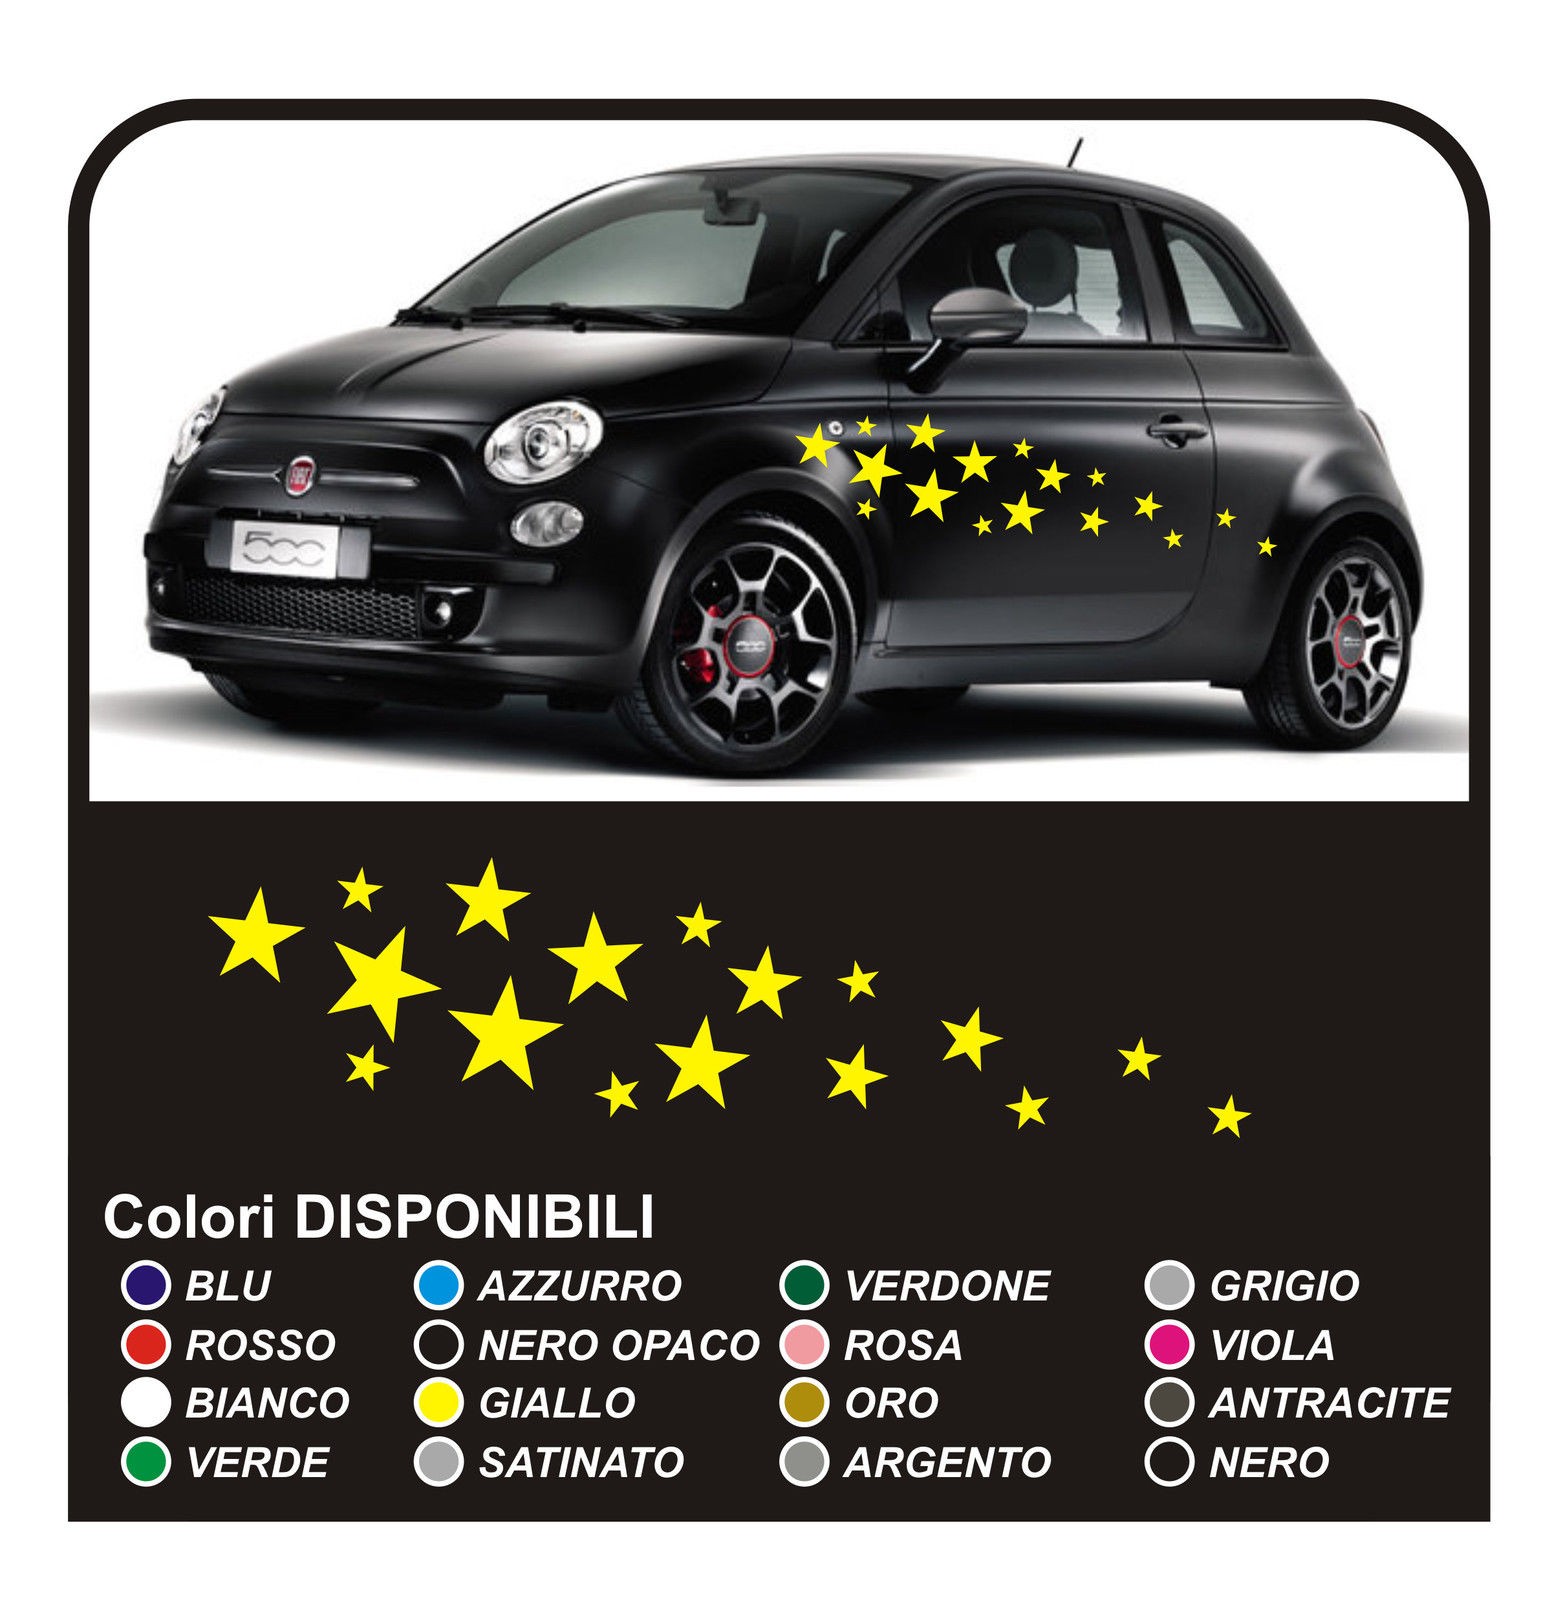 https://www.megagraficsrl.it/390/adesivi-auto-stelle-34pezzi-kit-500-stelle-smart-stelle-fiat-car-stars-stickers.jpg